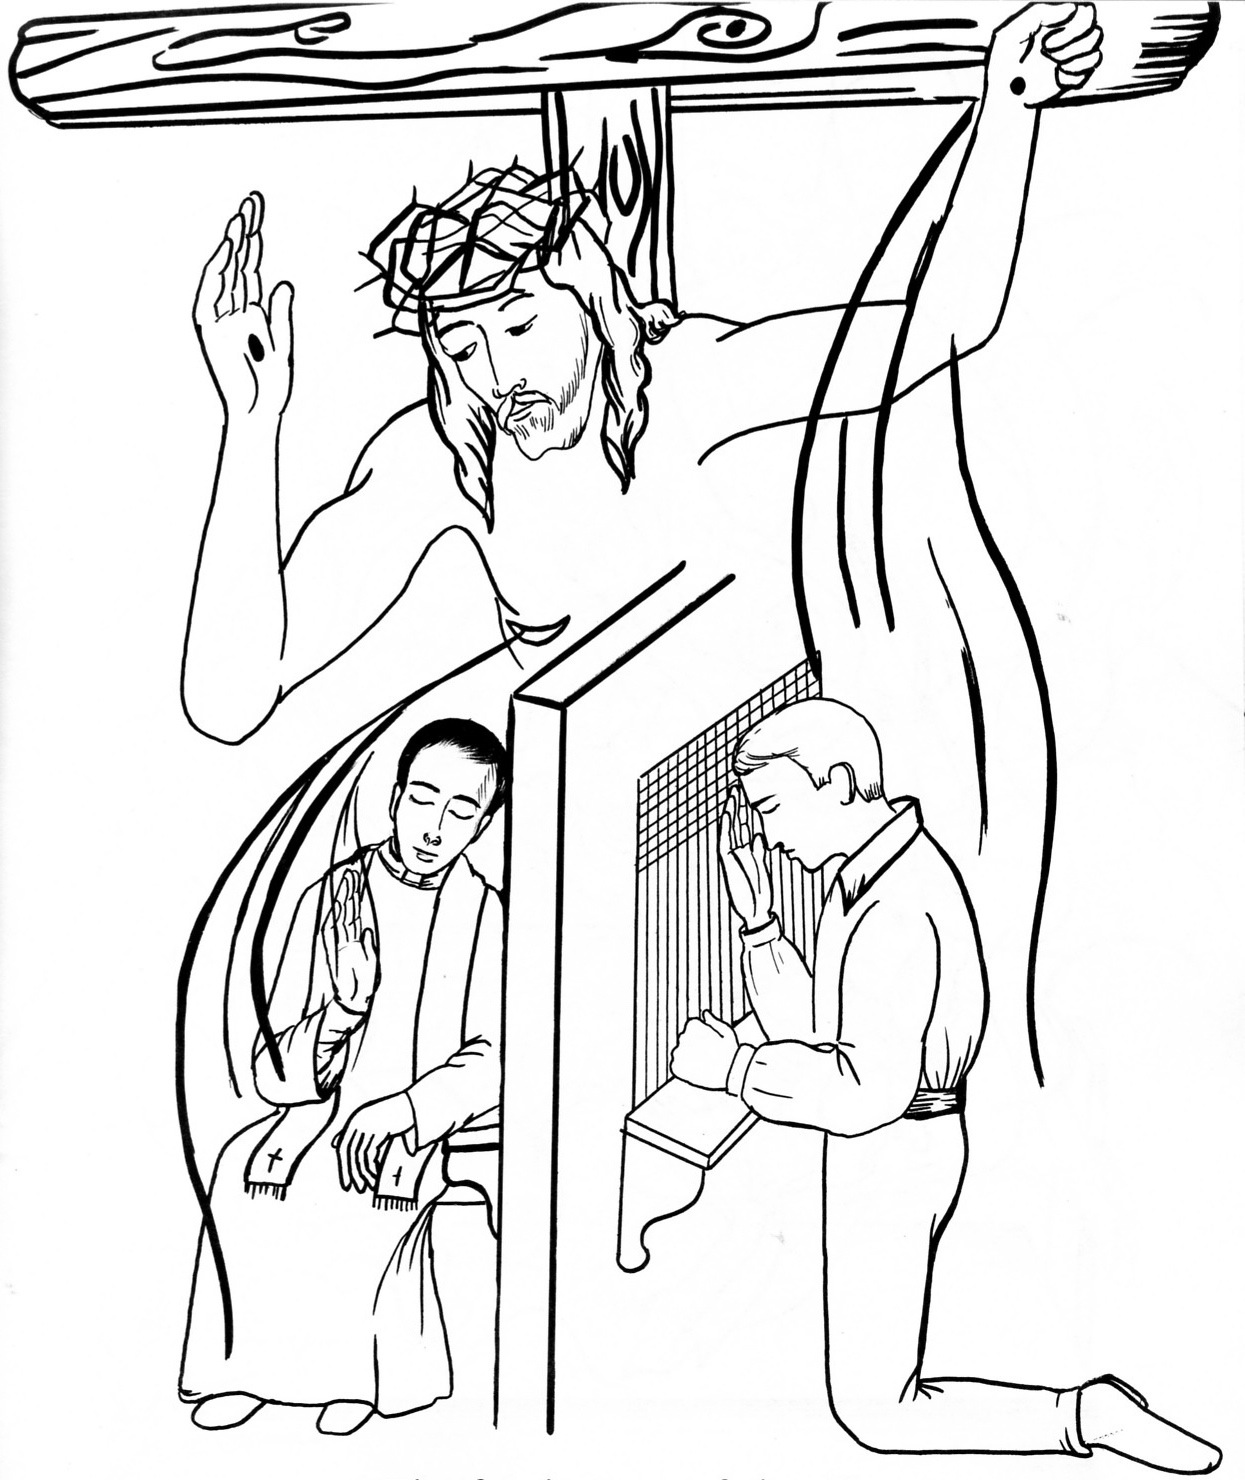 sacrament of confession coloring pages - photo #5